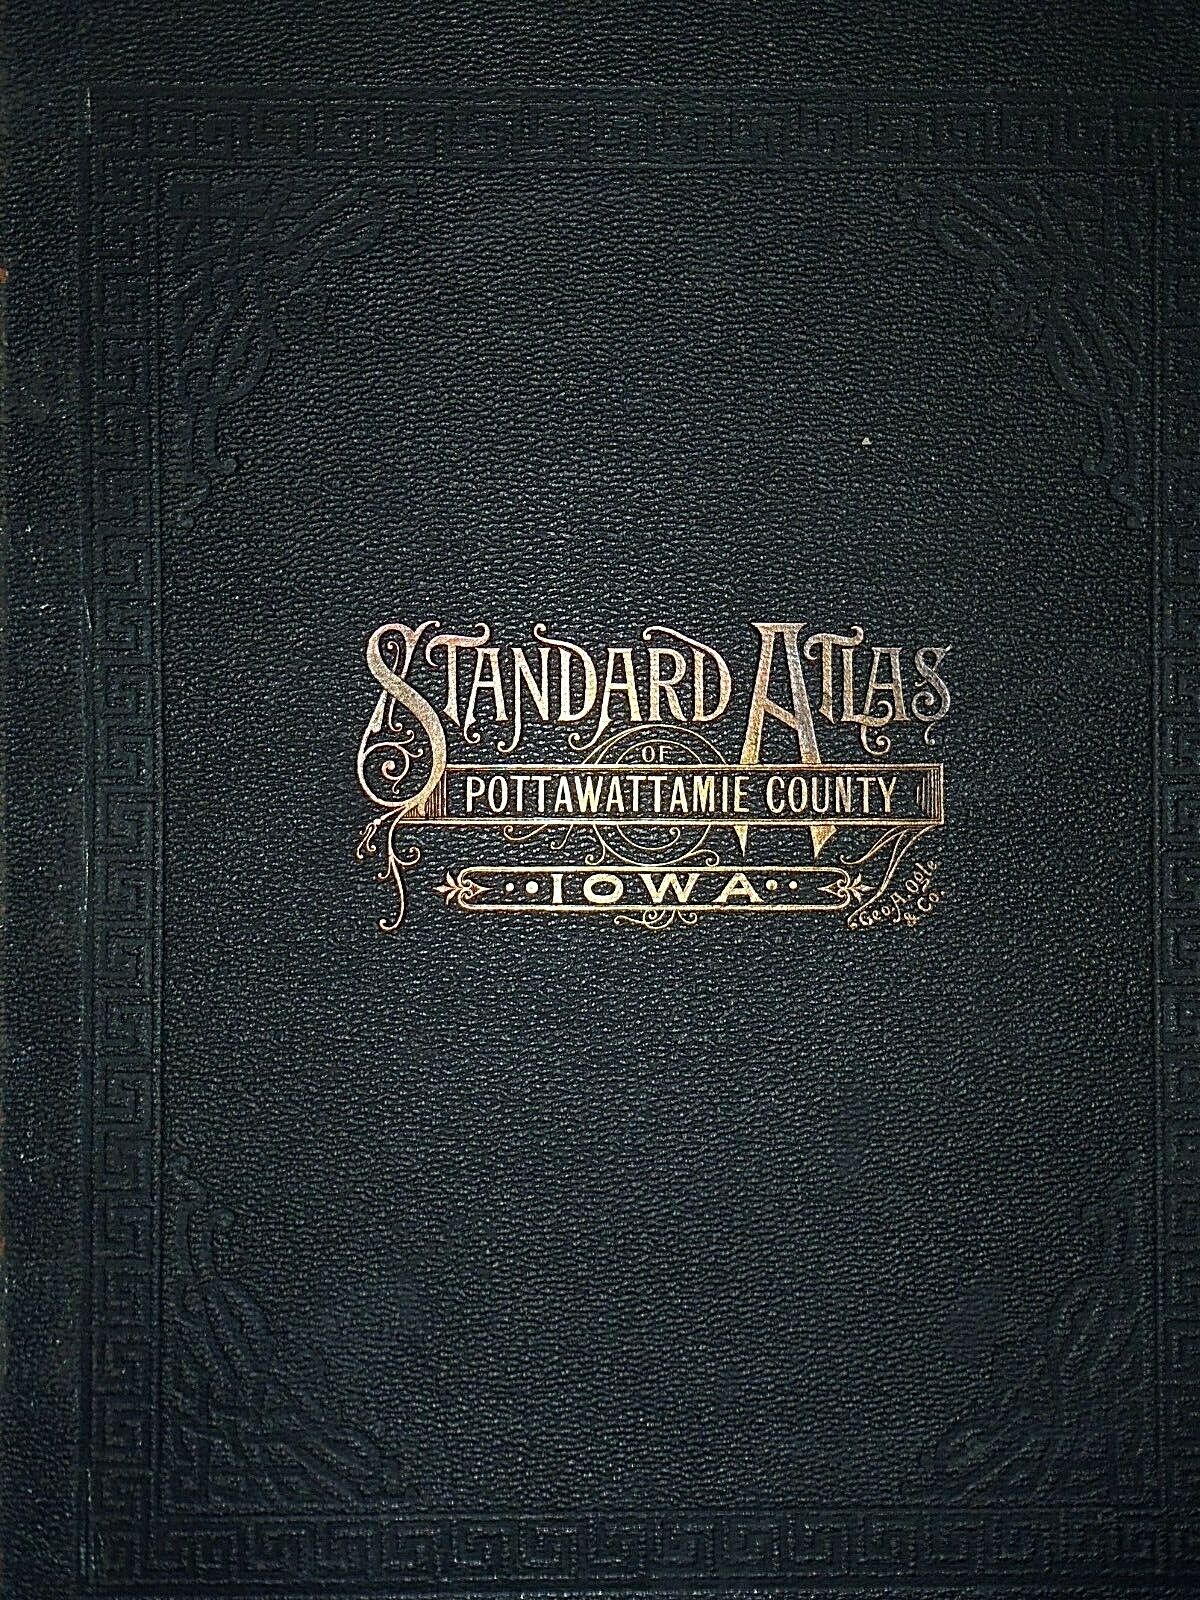 Rare Set of 7 Plat Maps ~ 1902 CITY of COUNCIL BLUFFS, IOWA ~ Original Authentic Без бренда - фотография #9